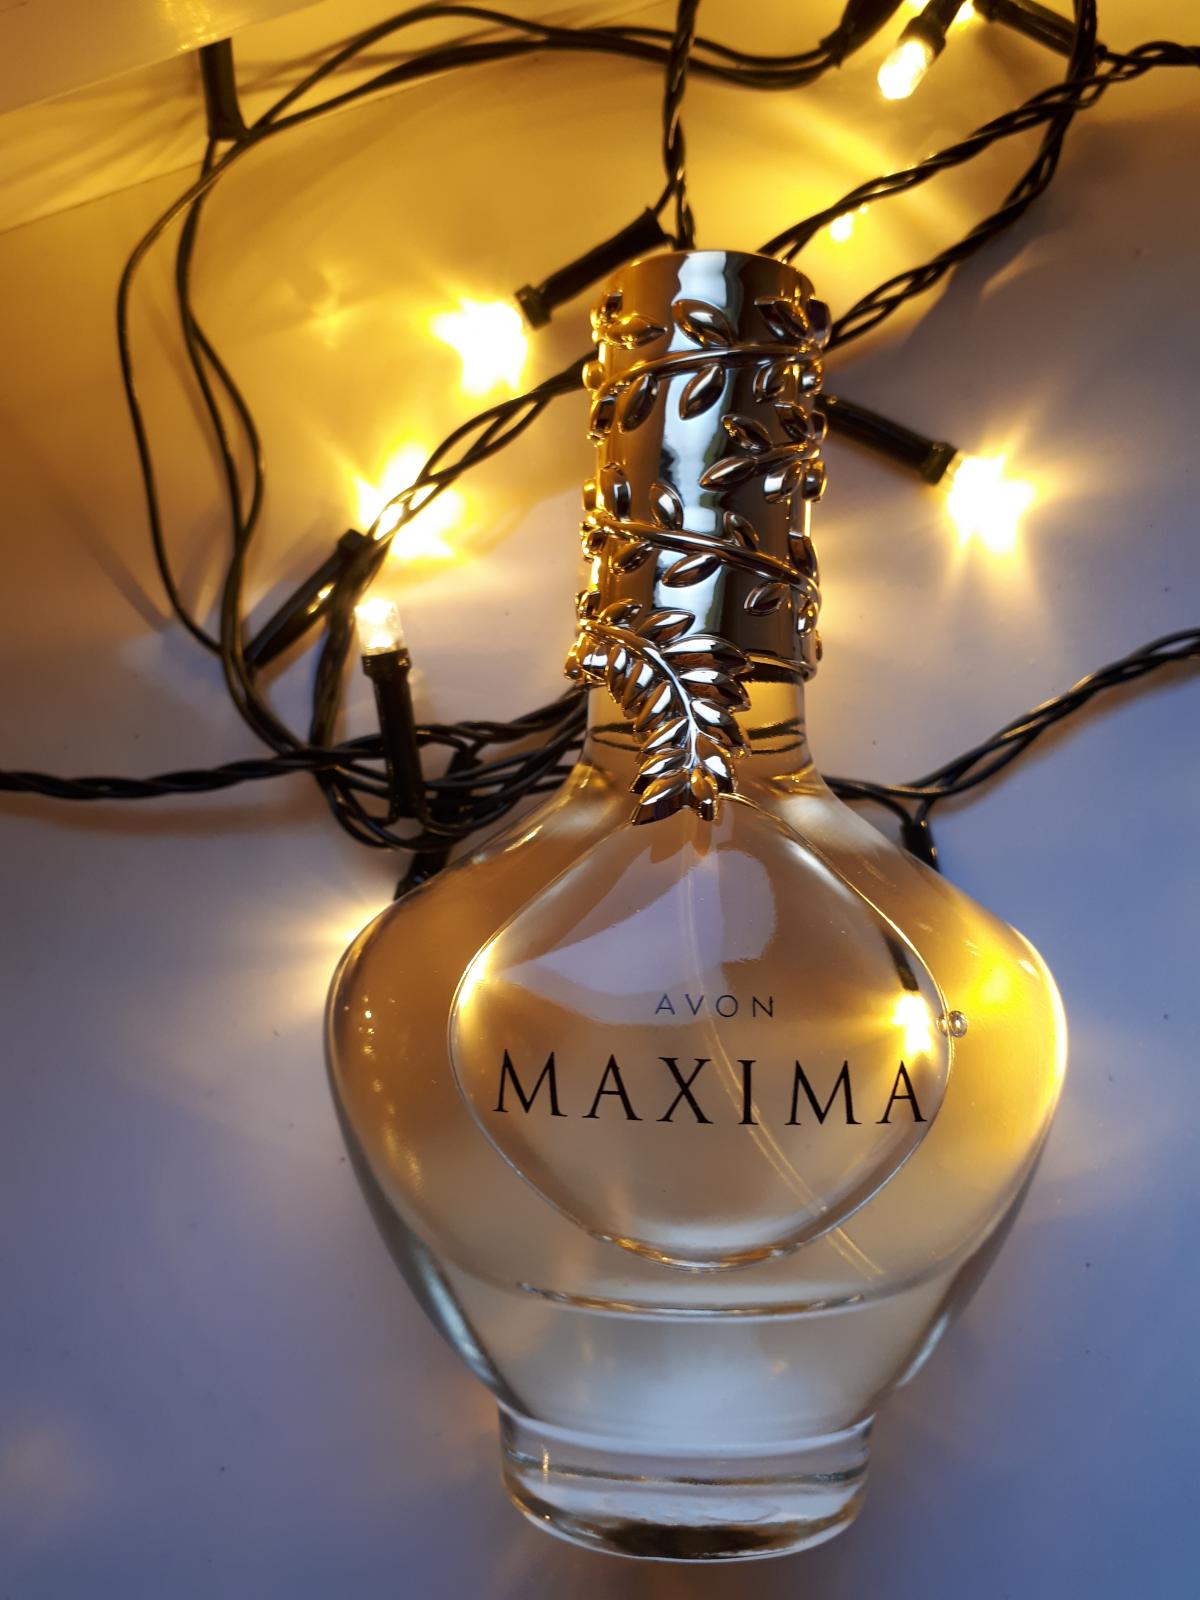 Maxima Avon perfume - a new fragrance for women 2019